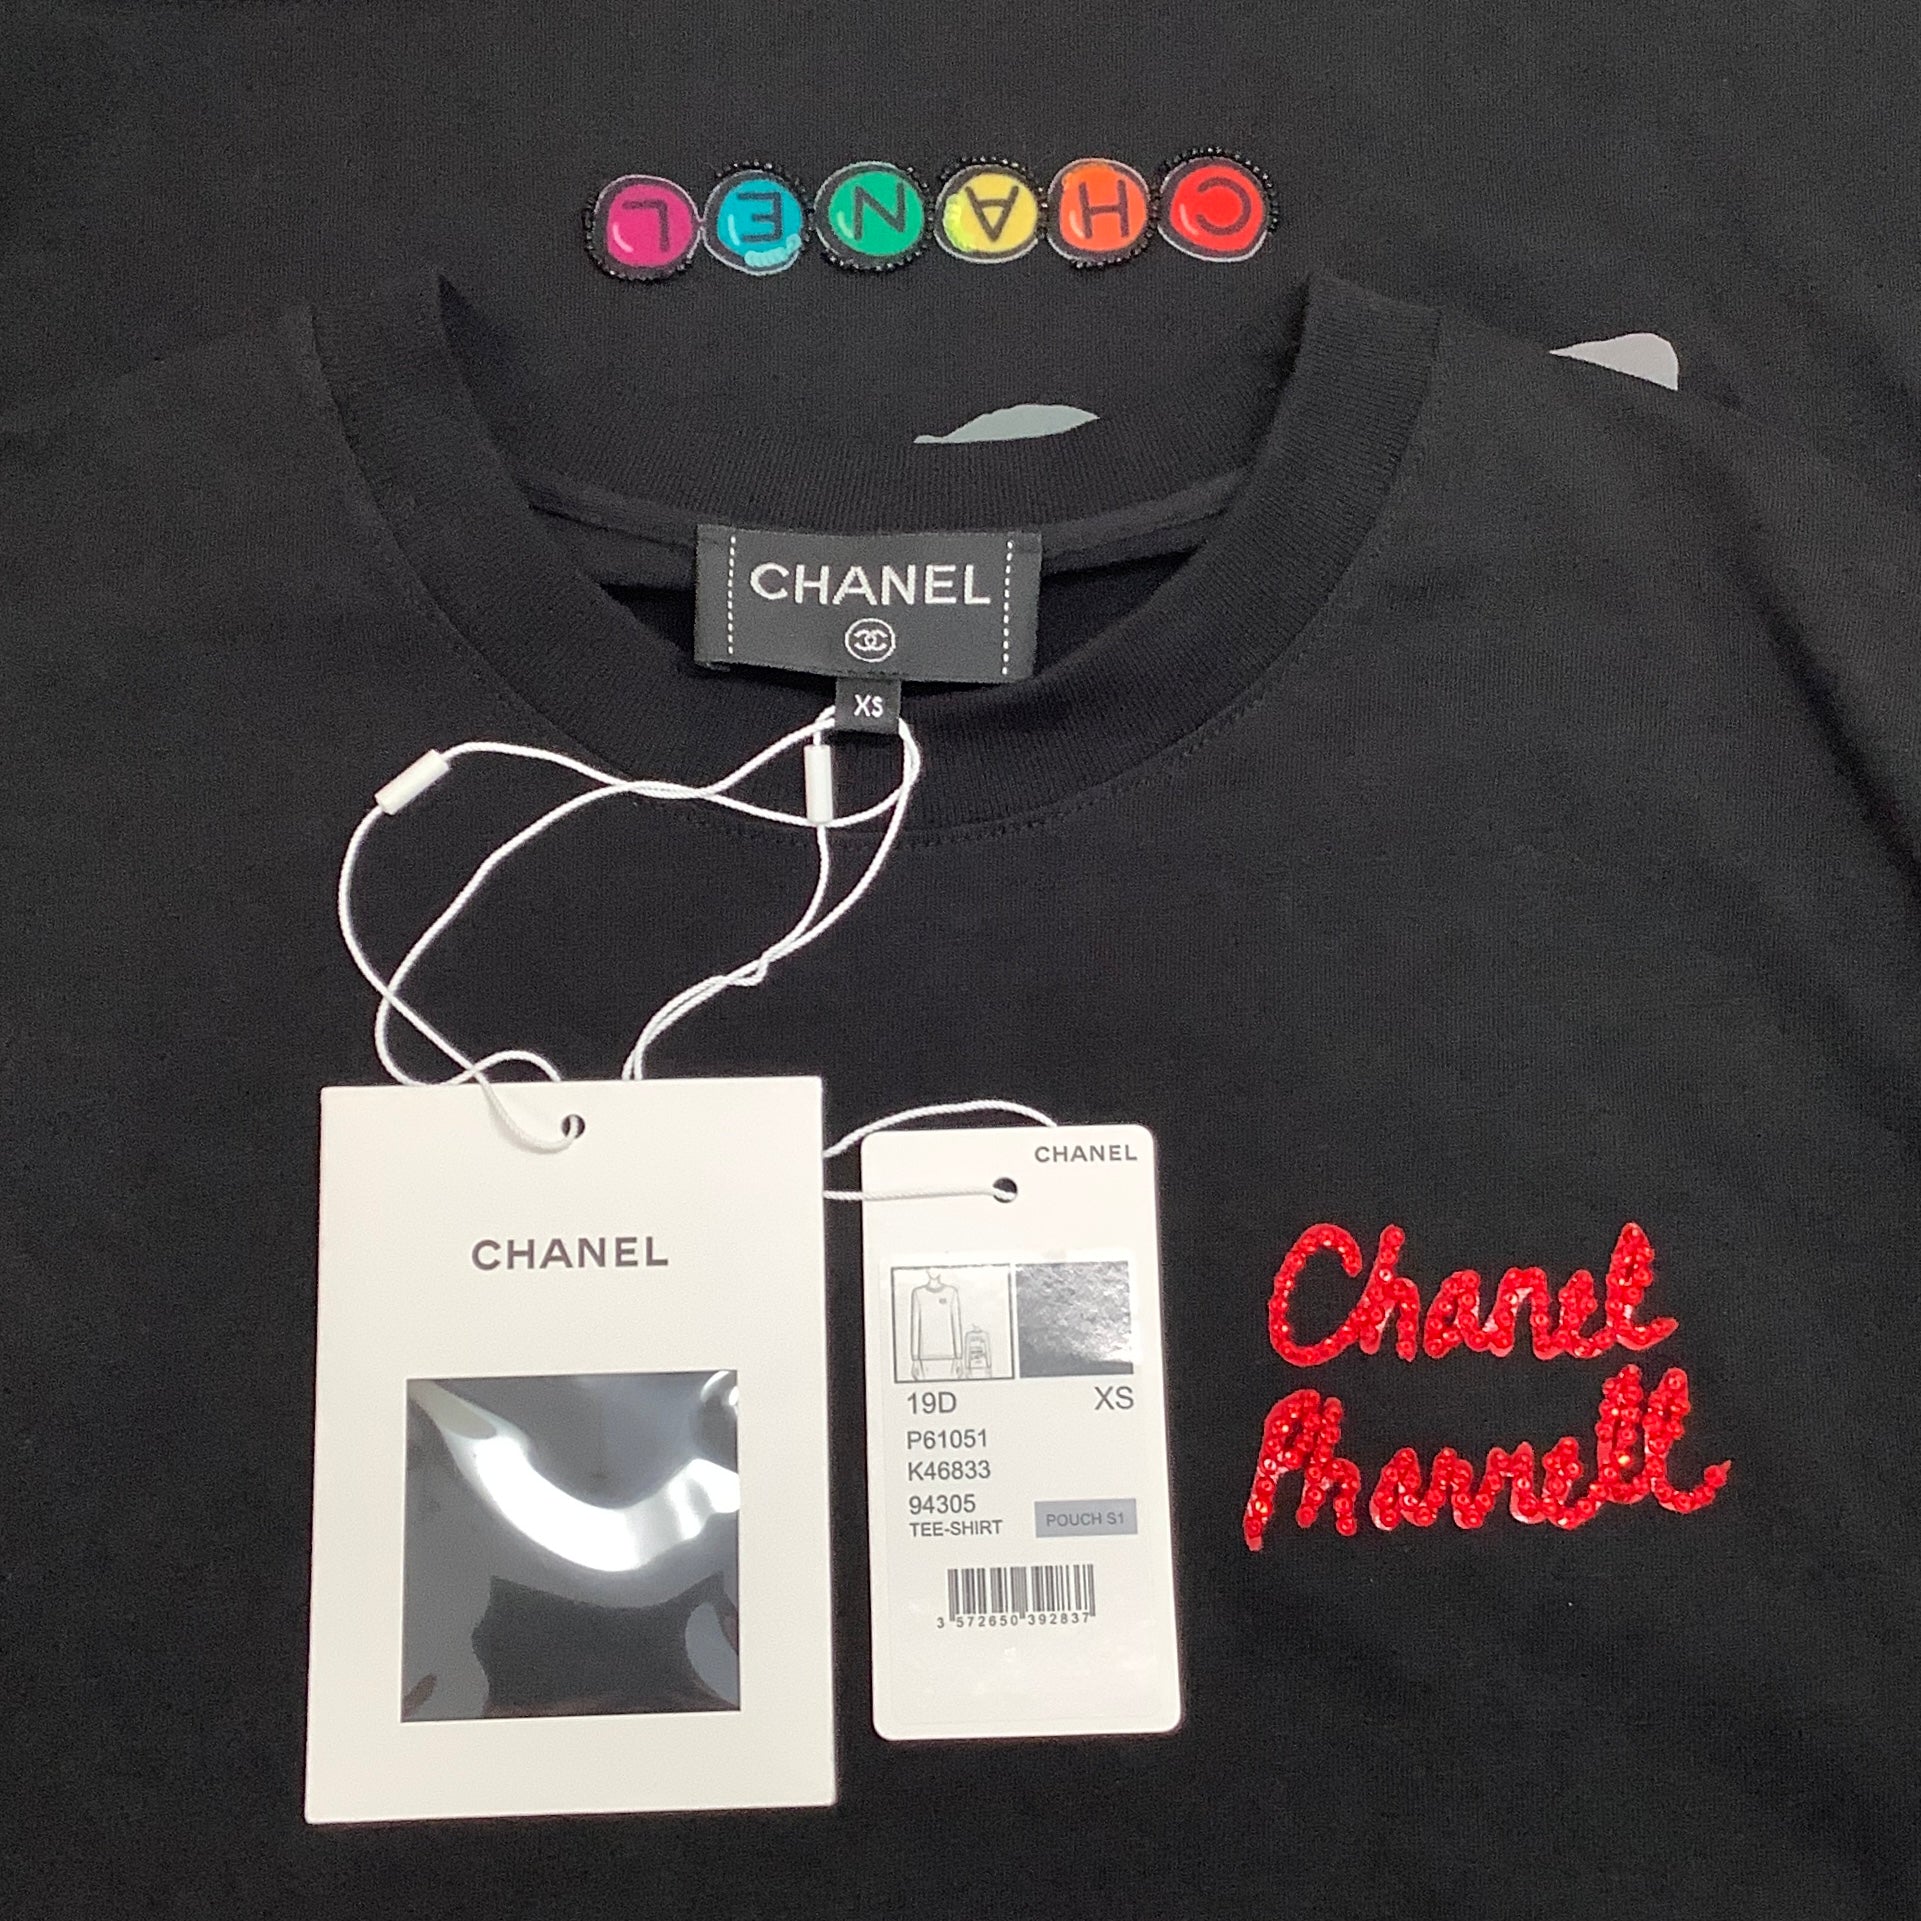 Chanel Black Cotton Long Sleeve Pharrell Wish List Tee Shirt